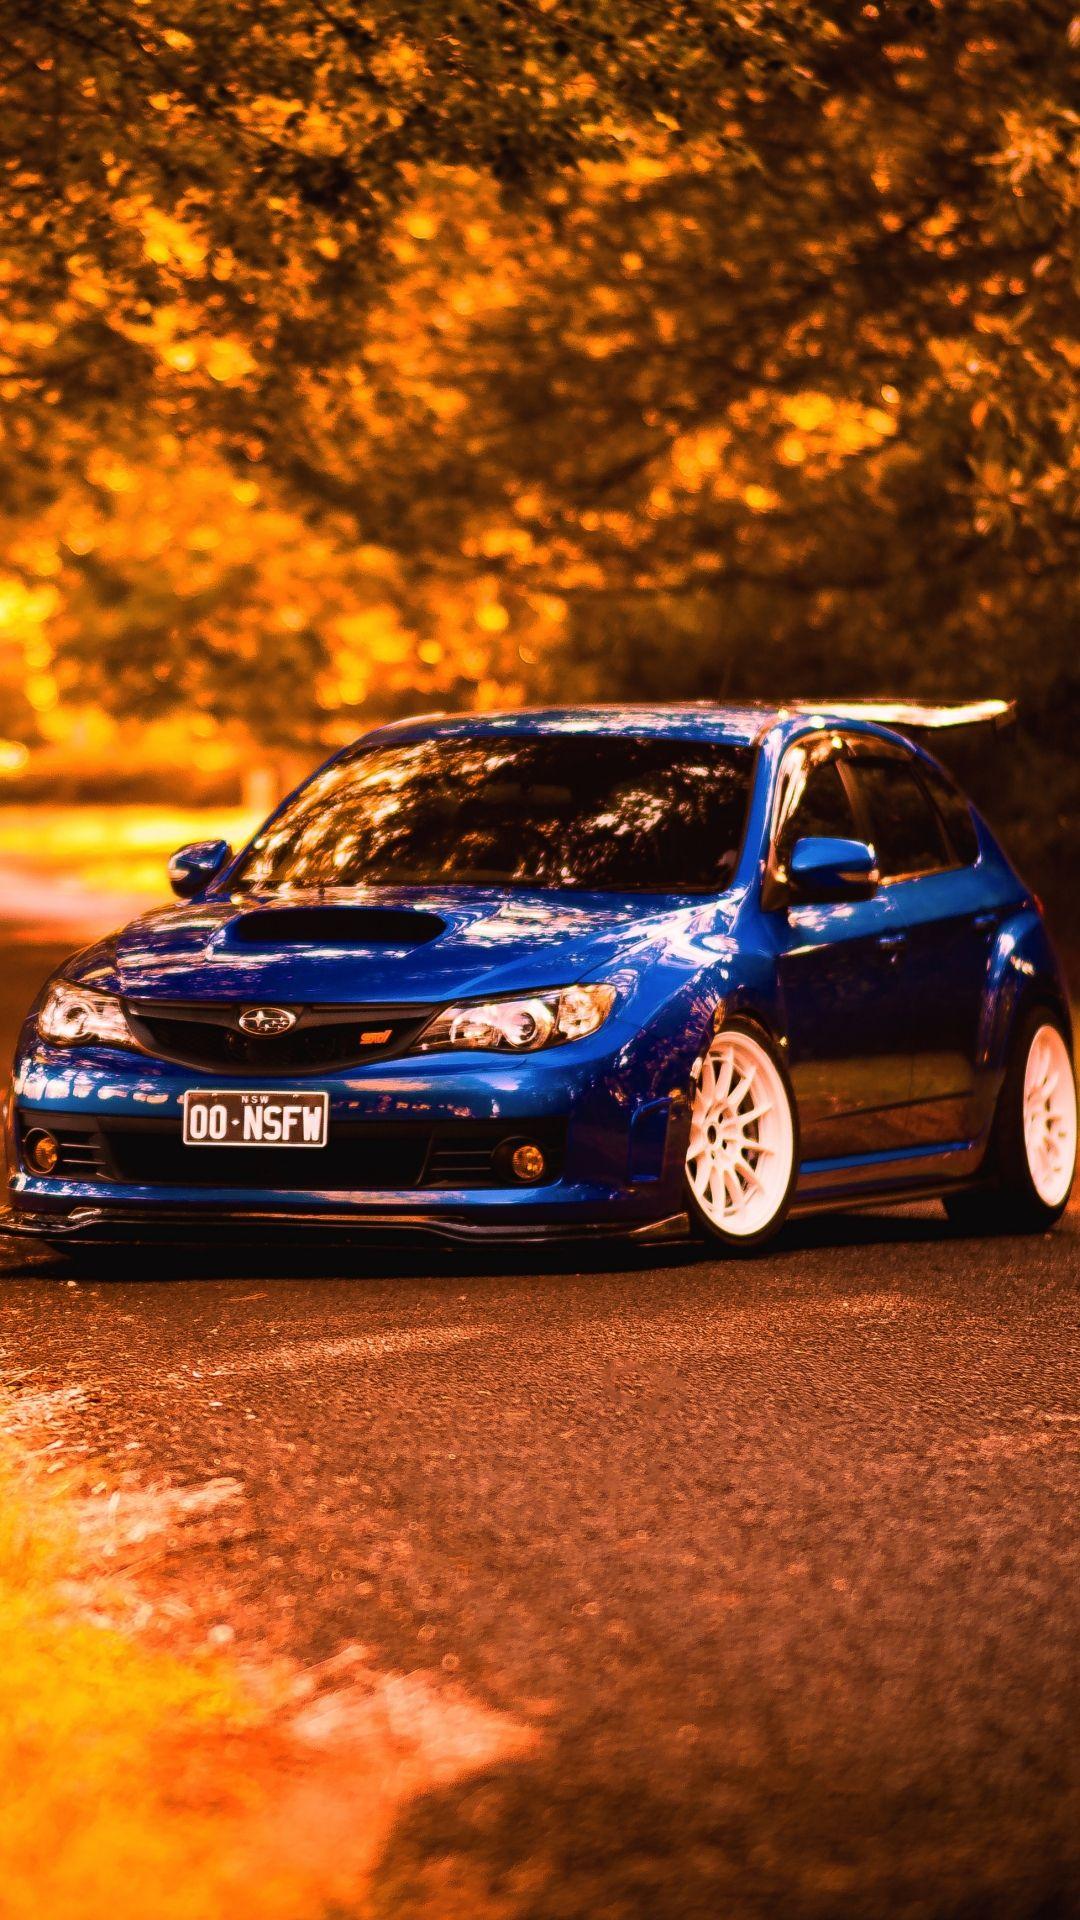 Subaru Wallpapers - Top Free Subaru Backgrounds ...